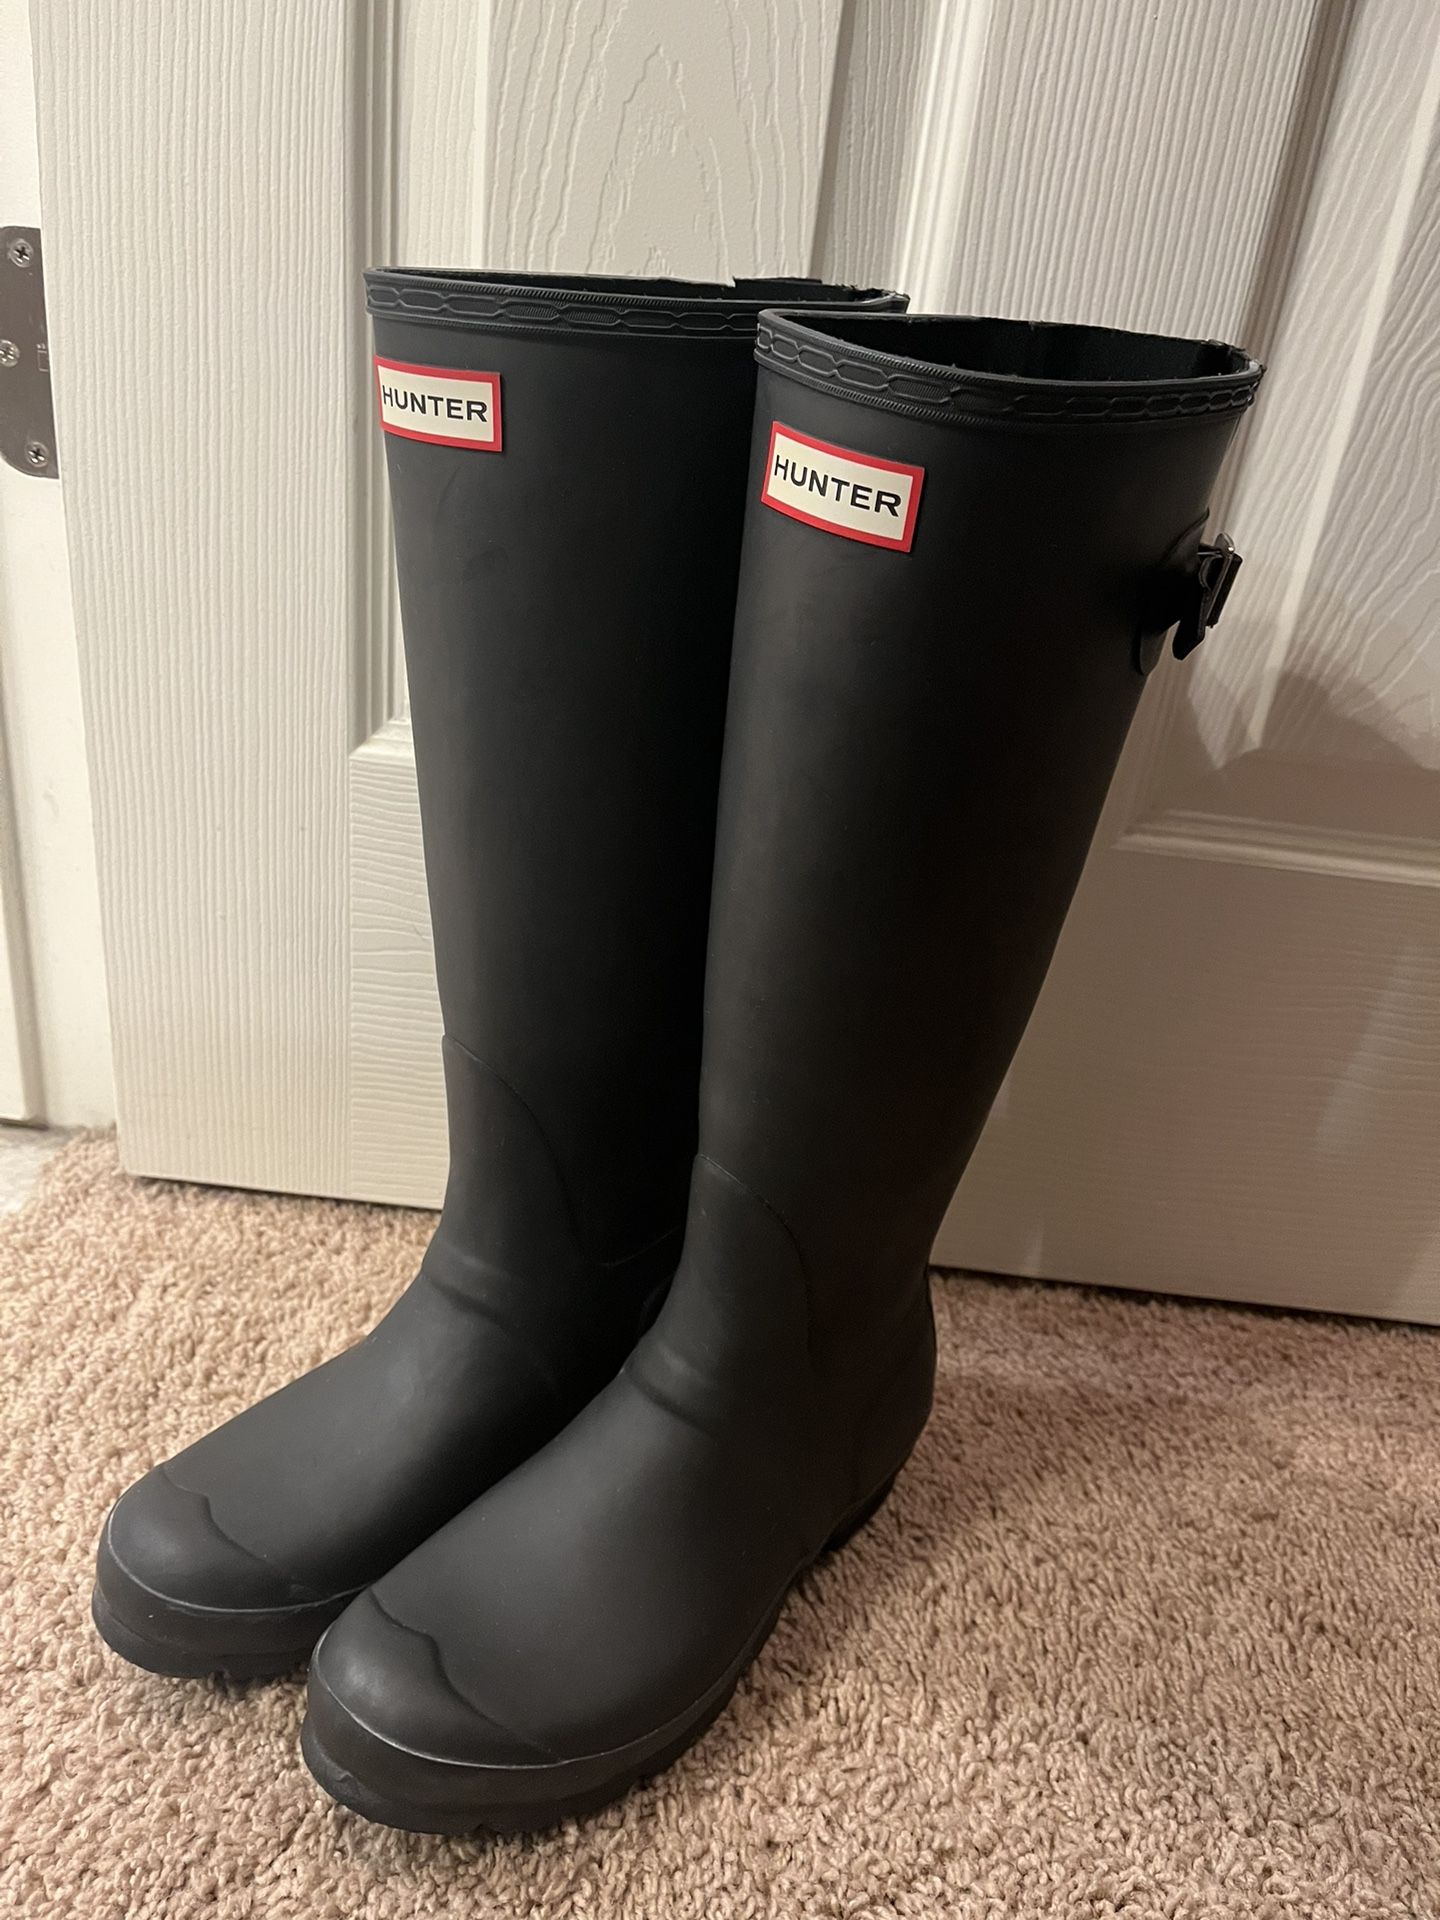 Hunter Women's Original Tall Waterproof Rain Boots, Black Matte, Size 7